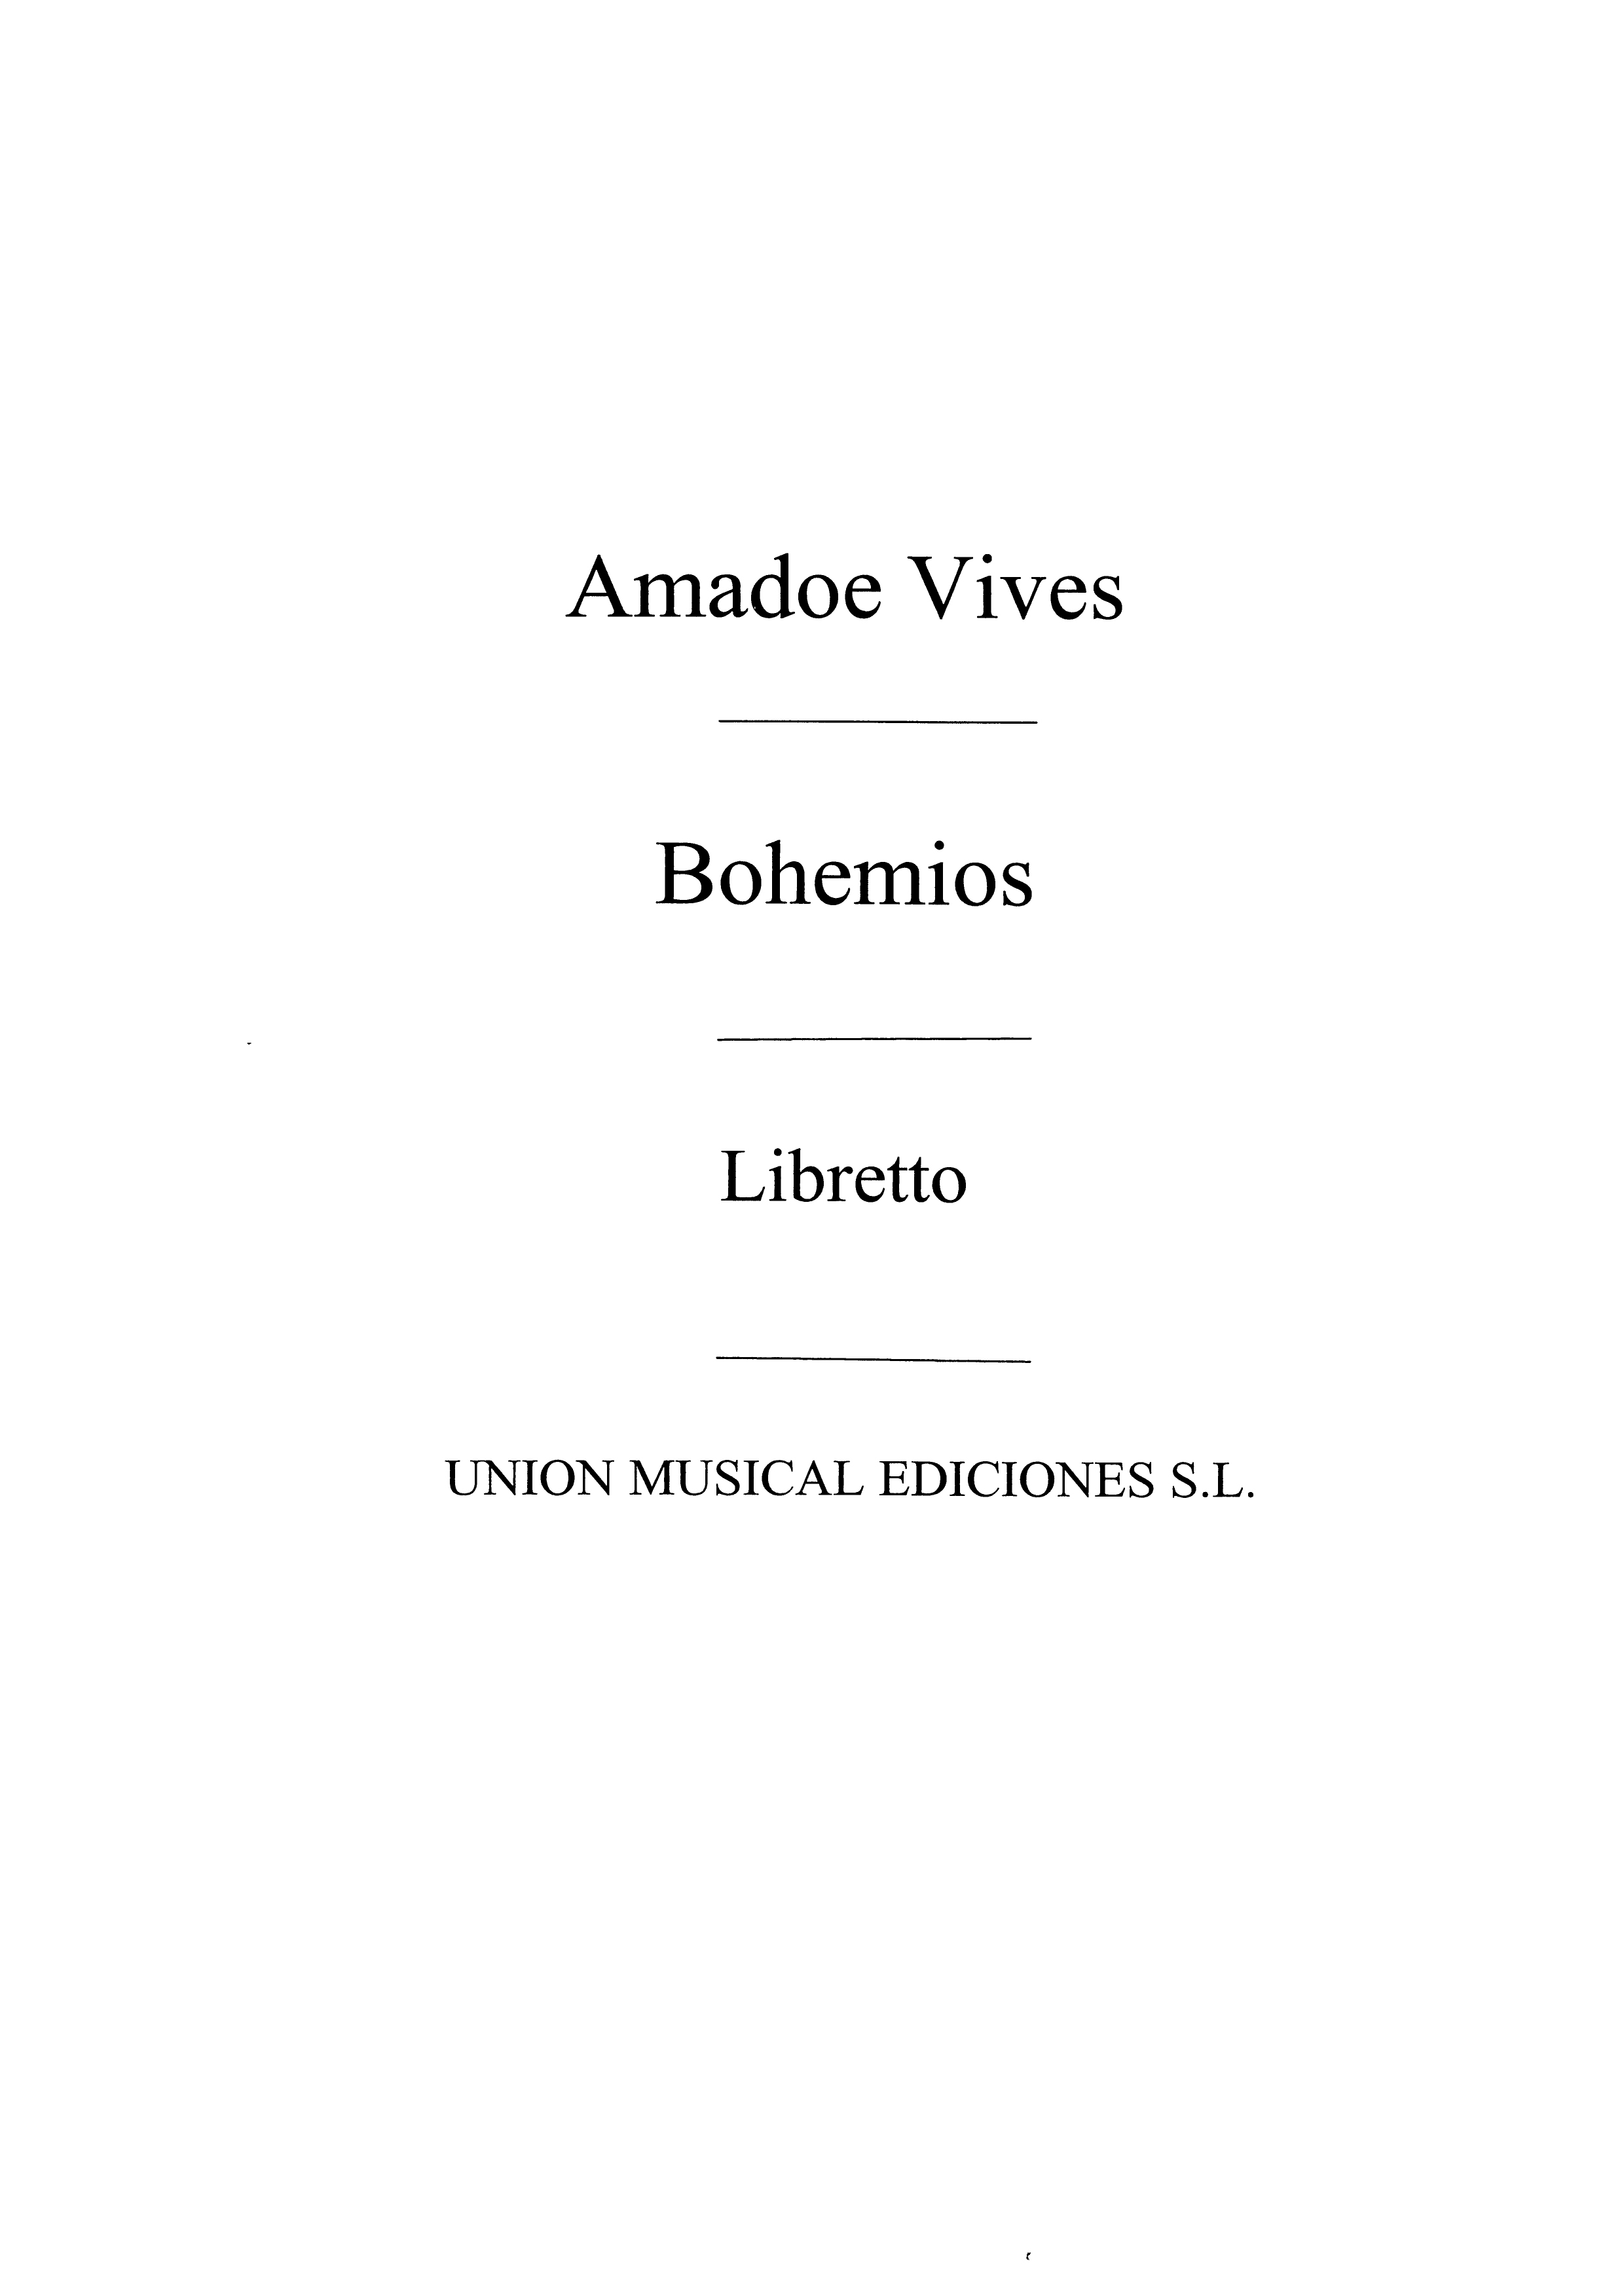 Amadeo Vives: Bohemios Libreto: Opera: Instrumental Work